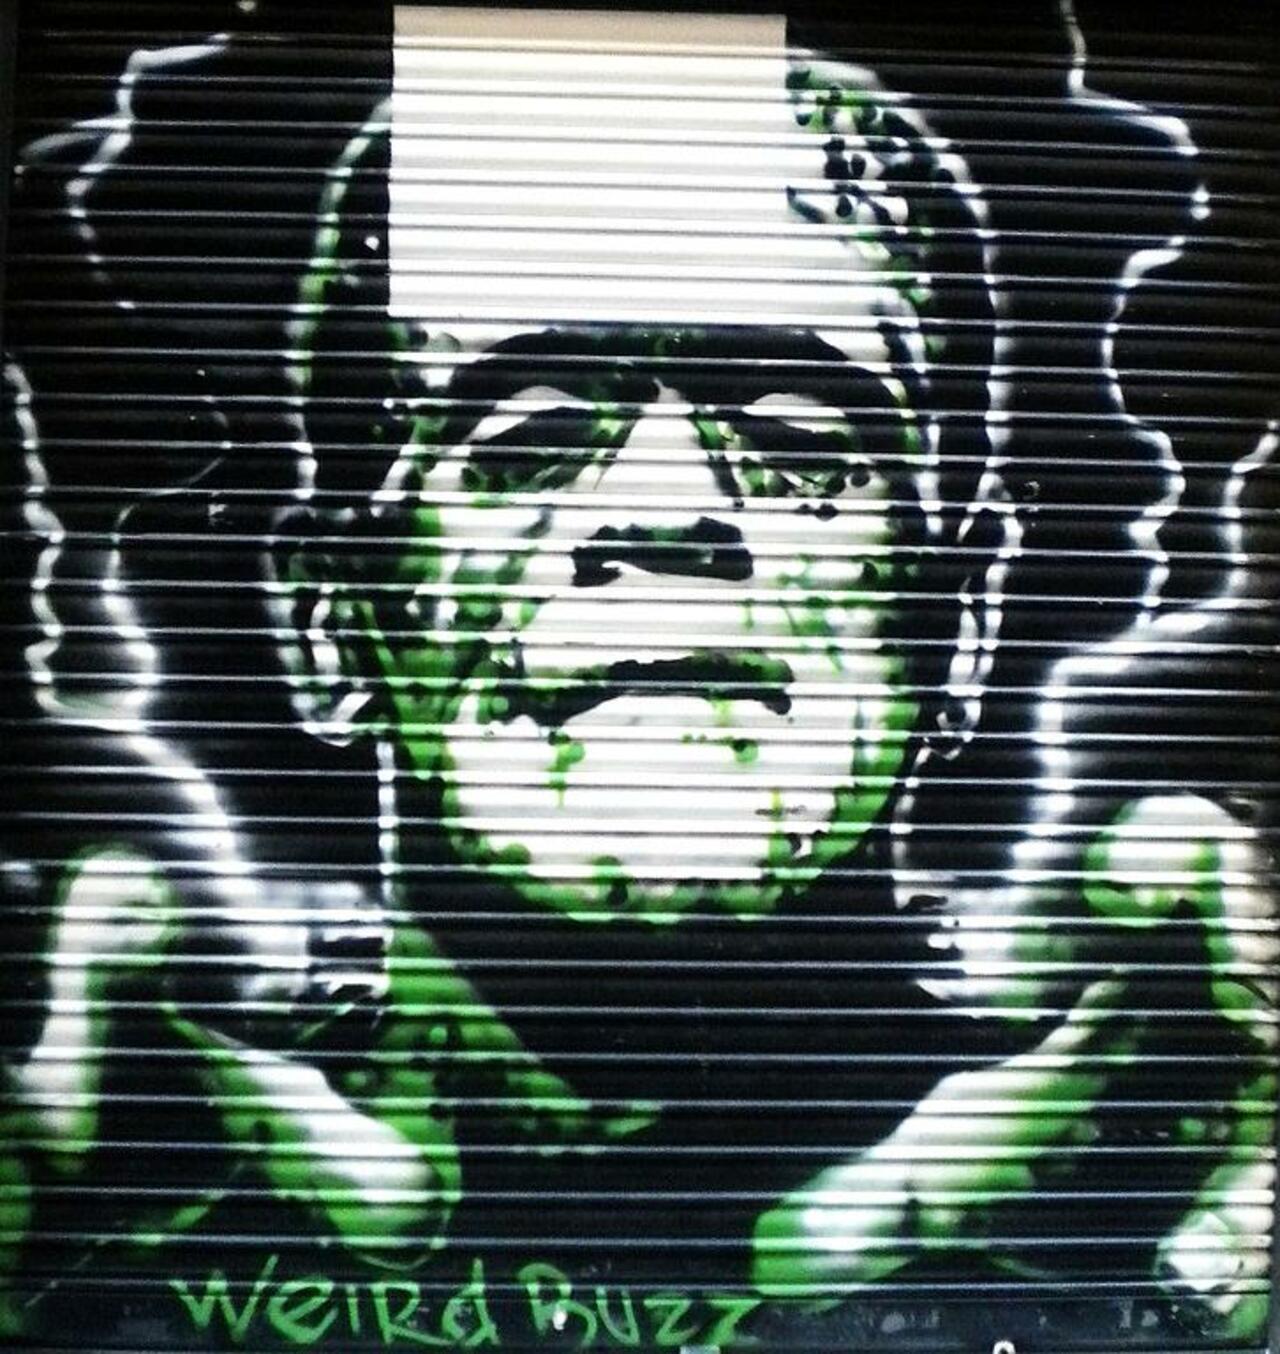 Street Art by anonymous in #Barcelona http://www.urbacolors.com #art #mural #graffiti #streetart http://t.co/47aBIFxwNl